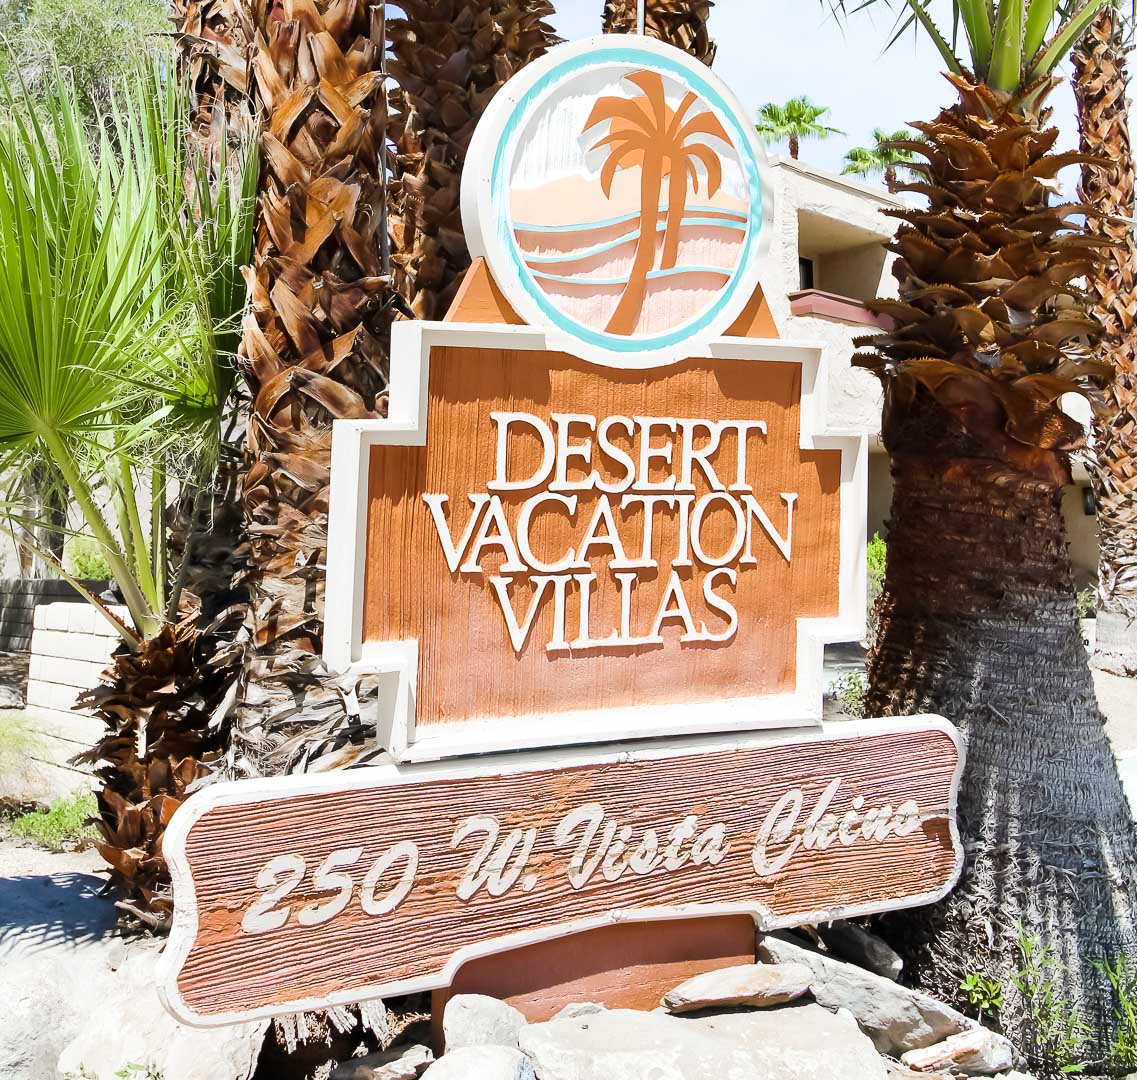 The resort signage at VRI's Desert Vacation Villas in Palm Springs California.